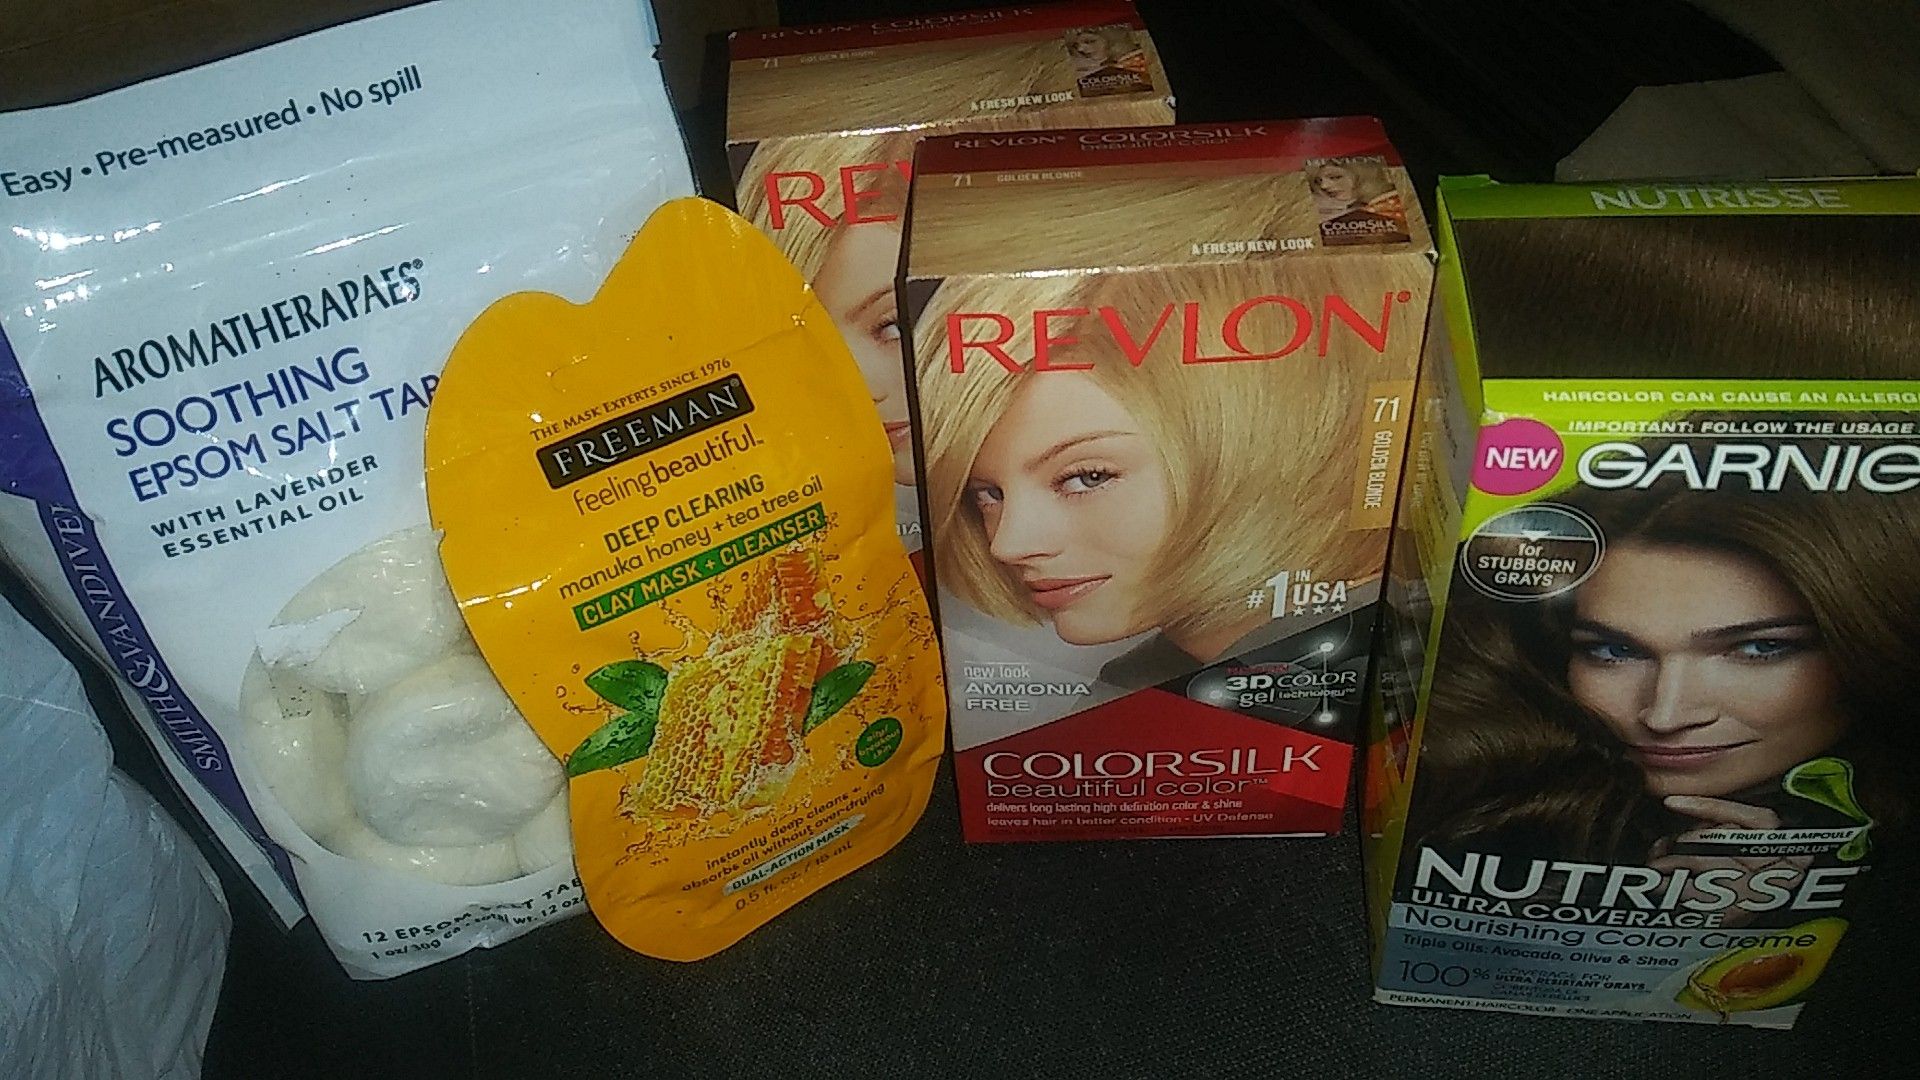 Revlon Garnier Hair Dye with free gift